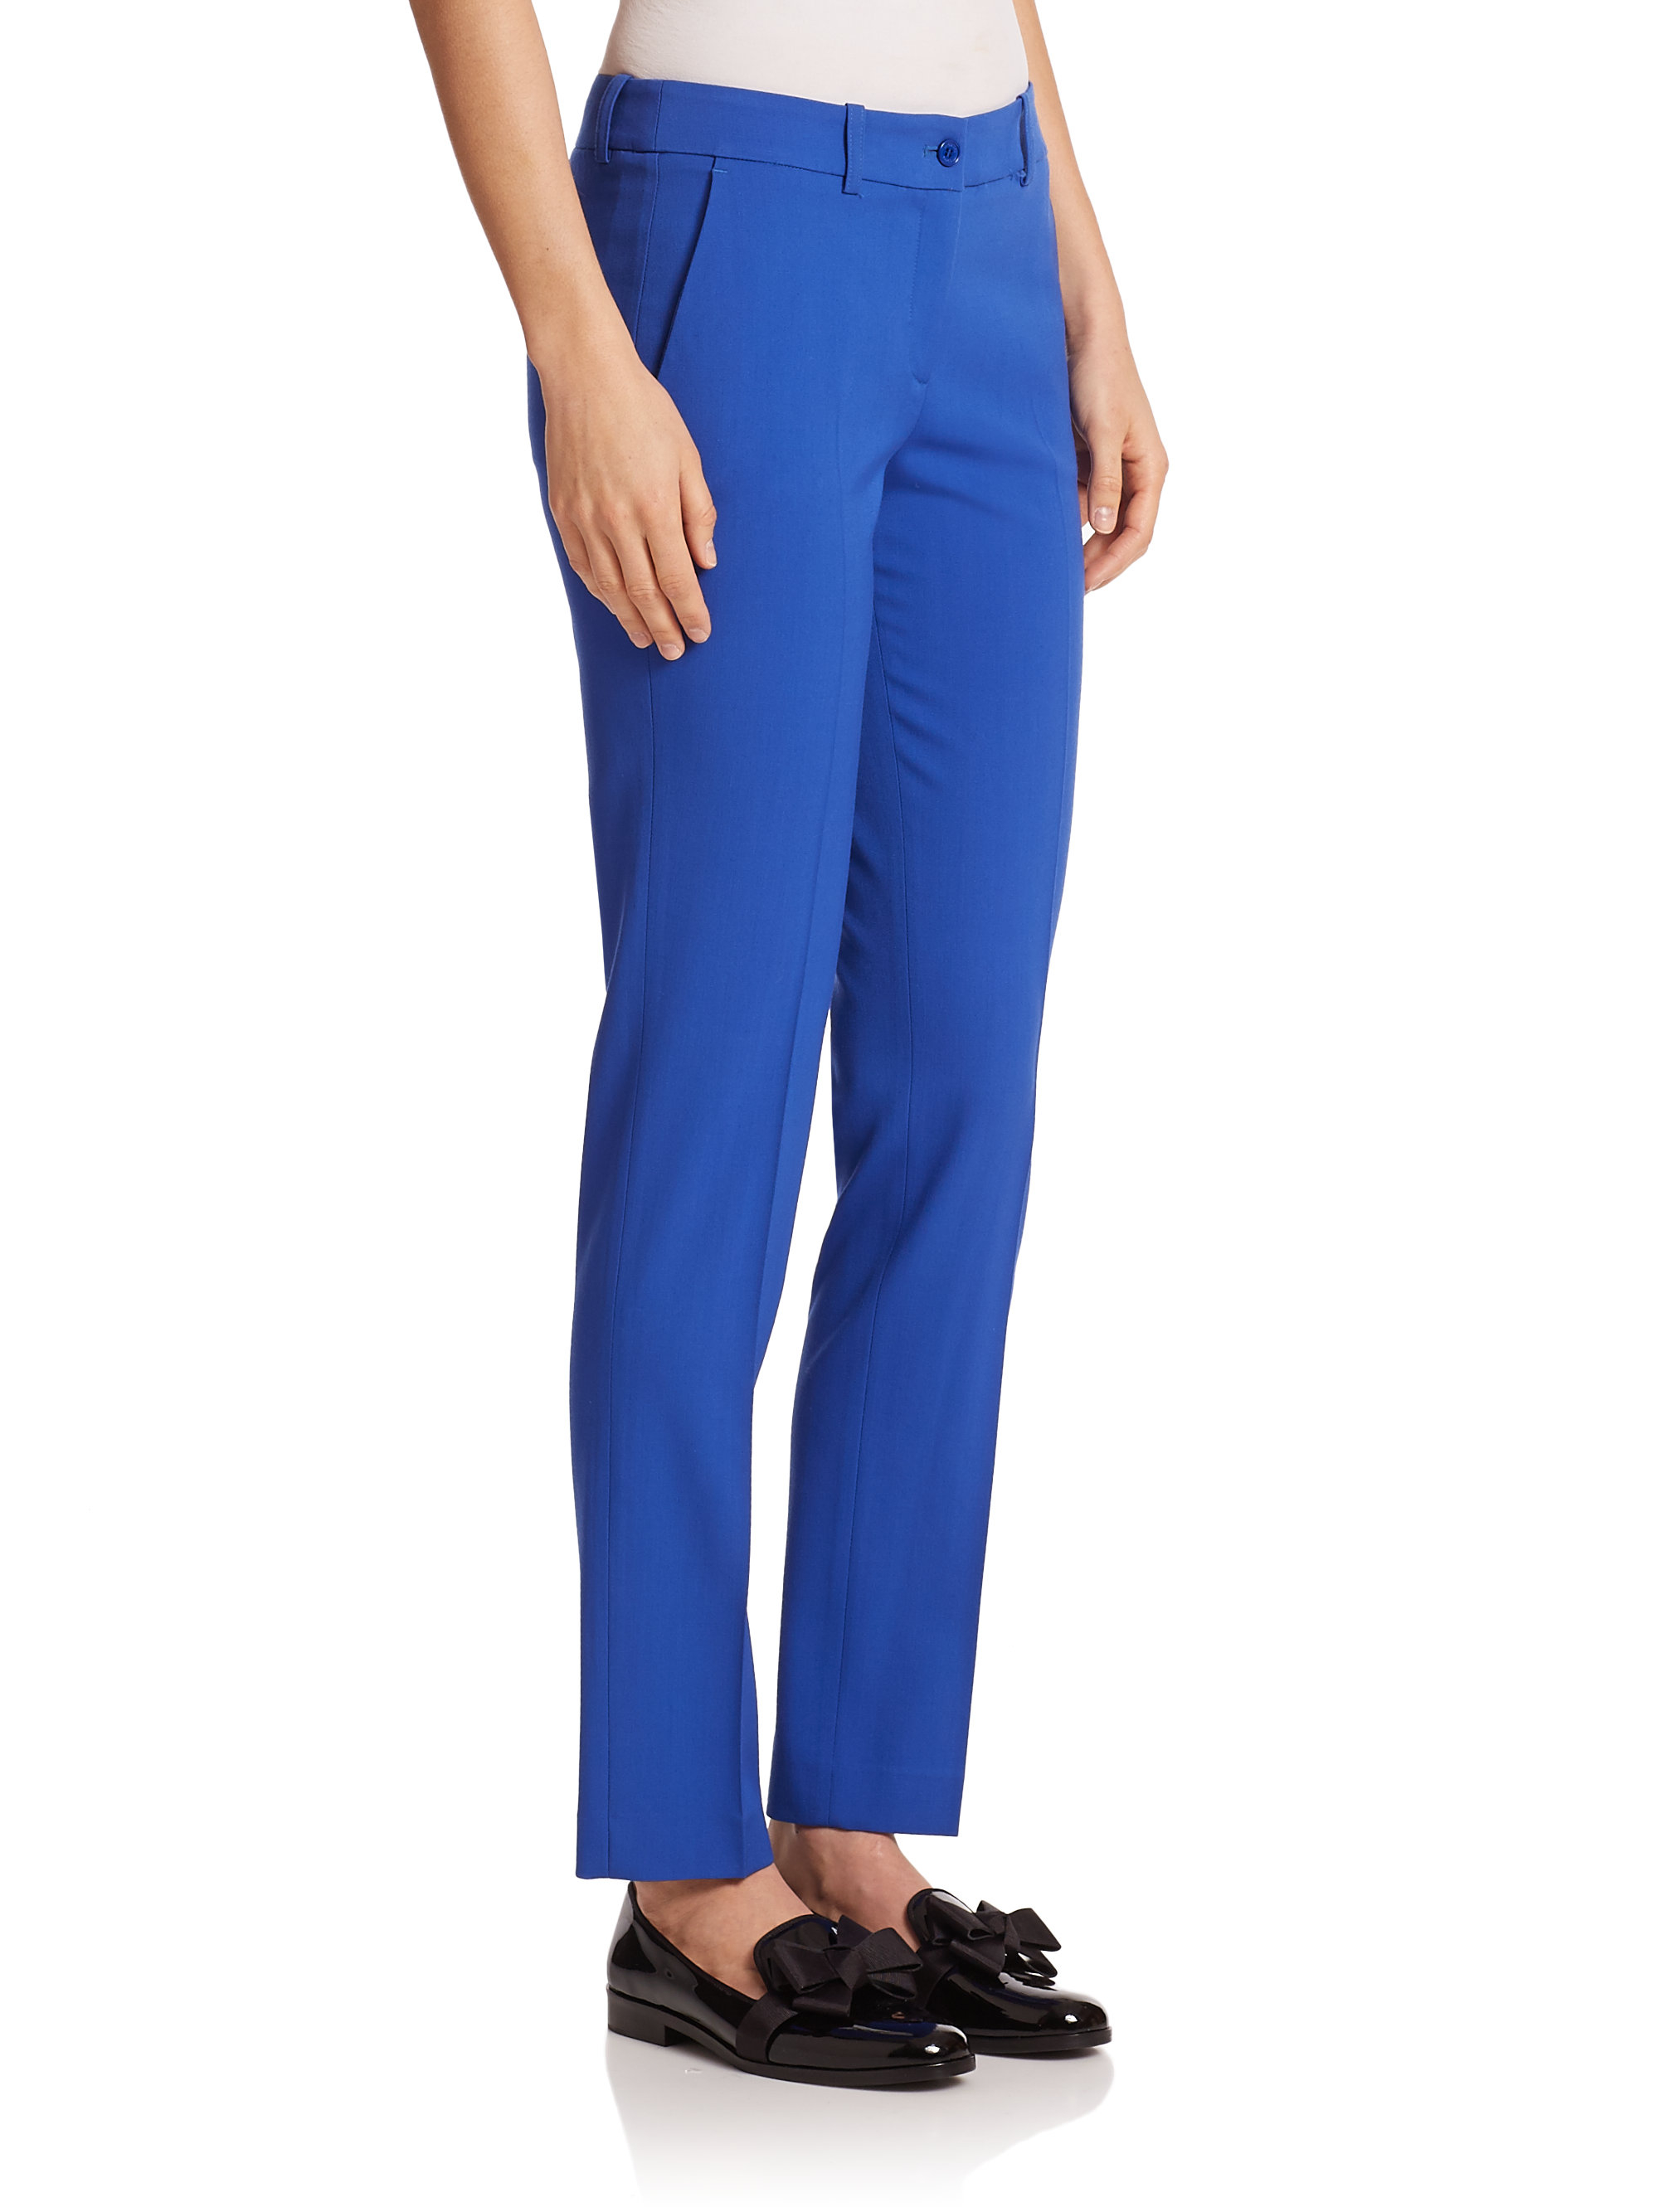 Lyst - Michael Kors Wool Gabardine Pants in Blue